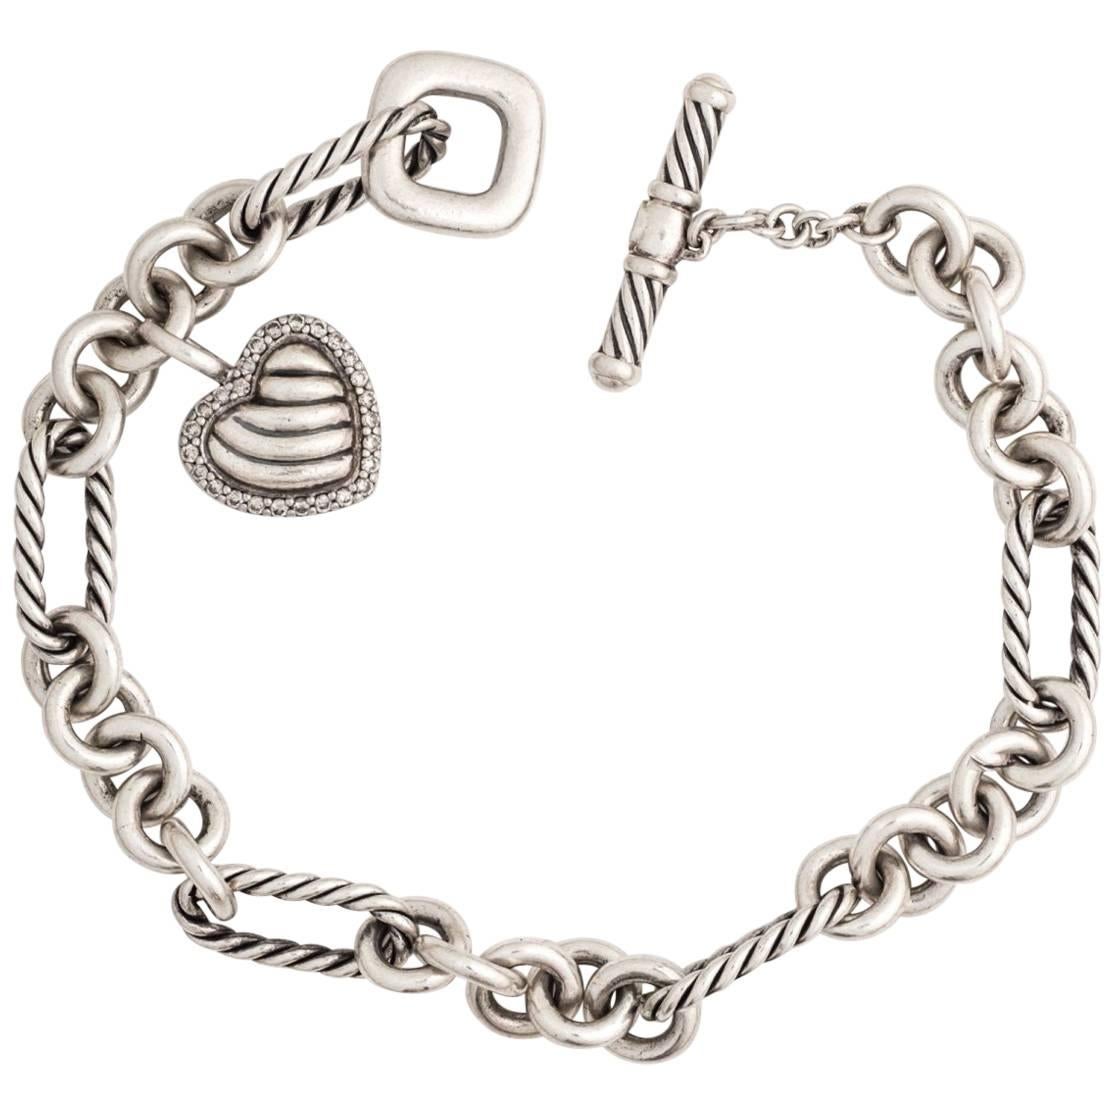 David Yurman Diamond Heart Charm Cable Bracelet in Sterling Silver